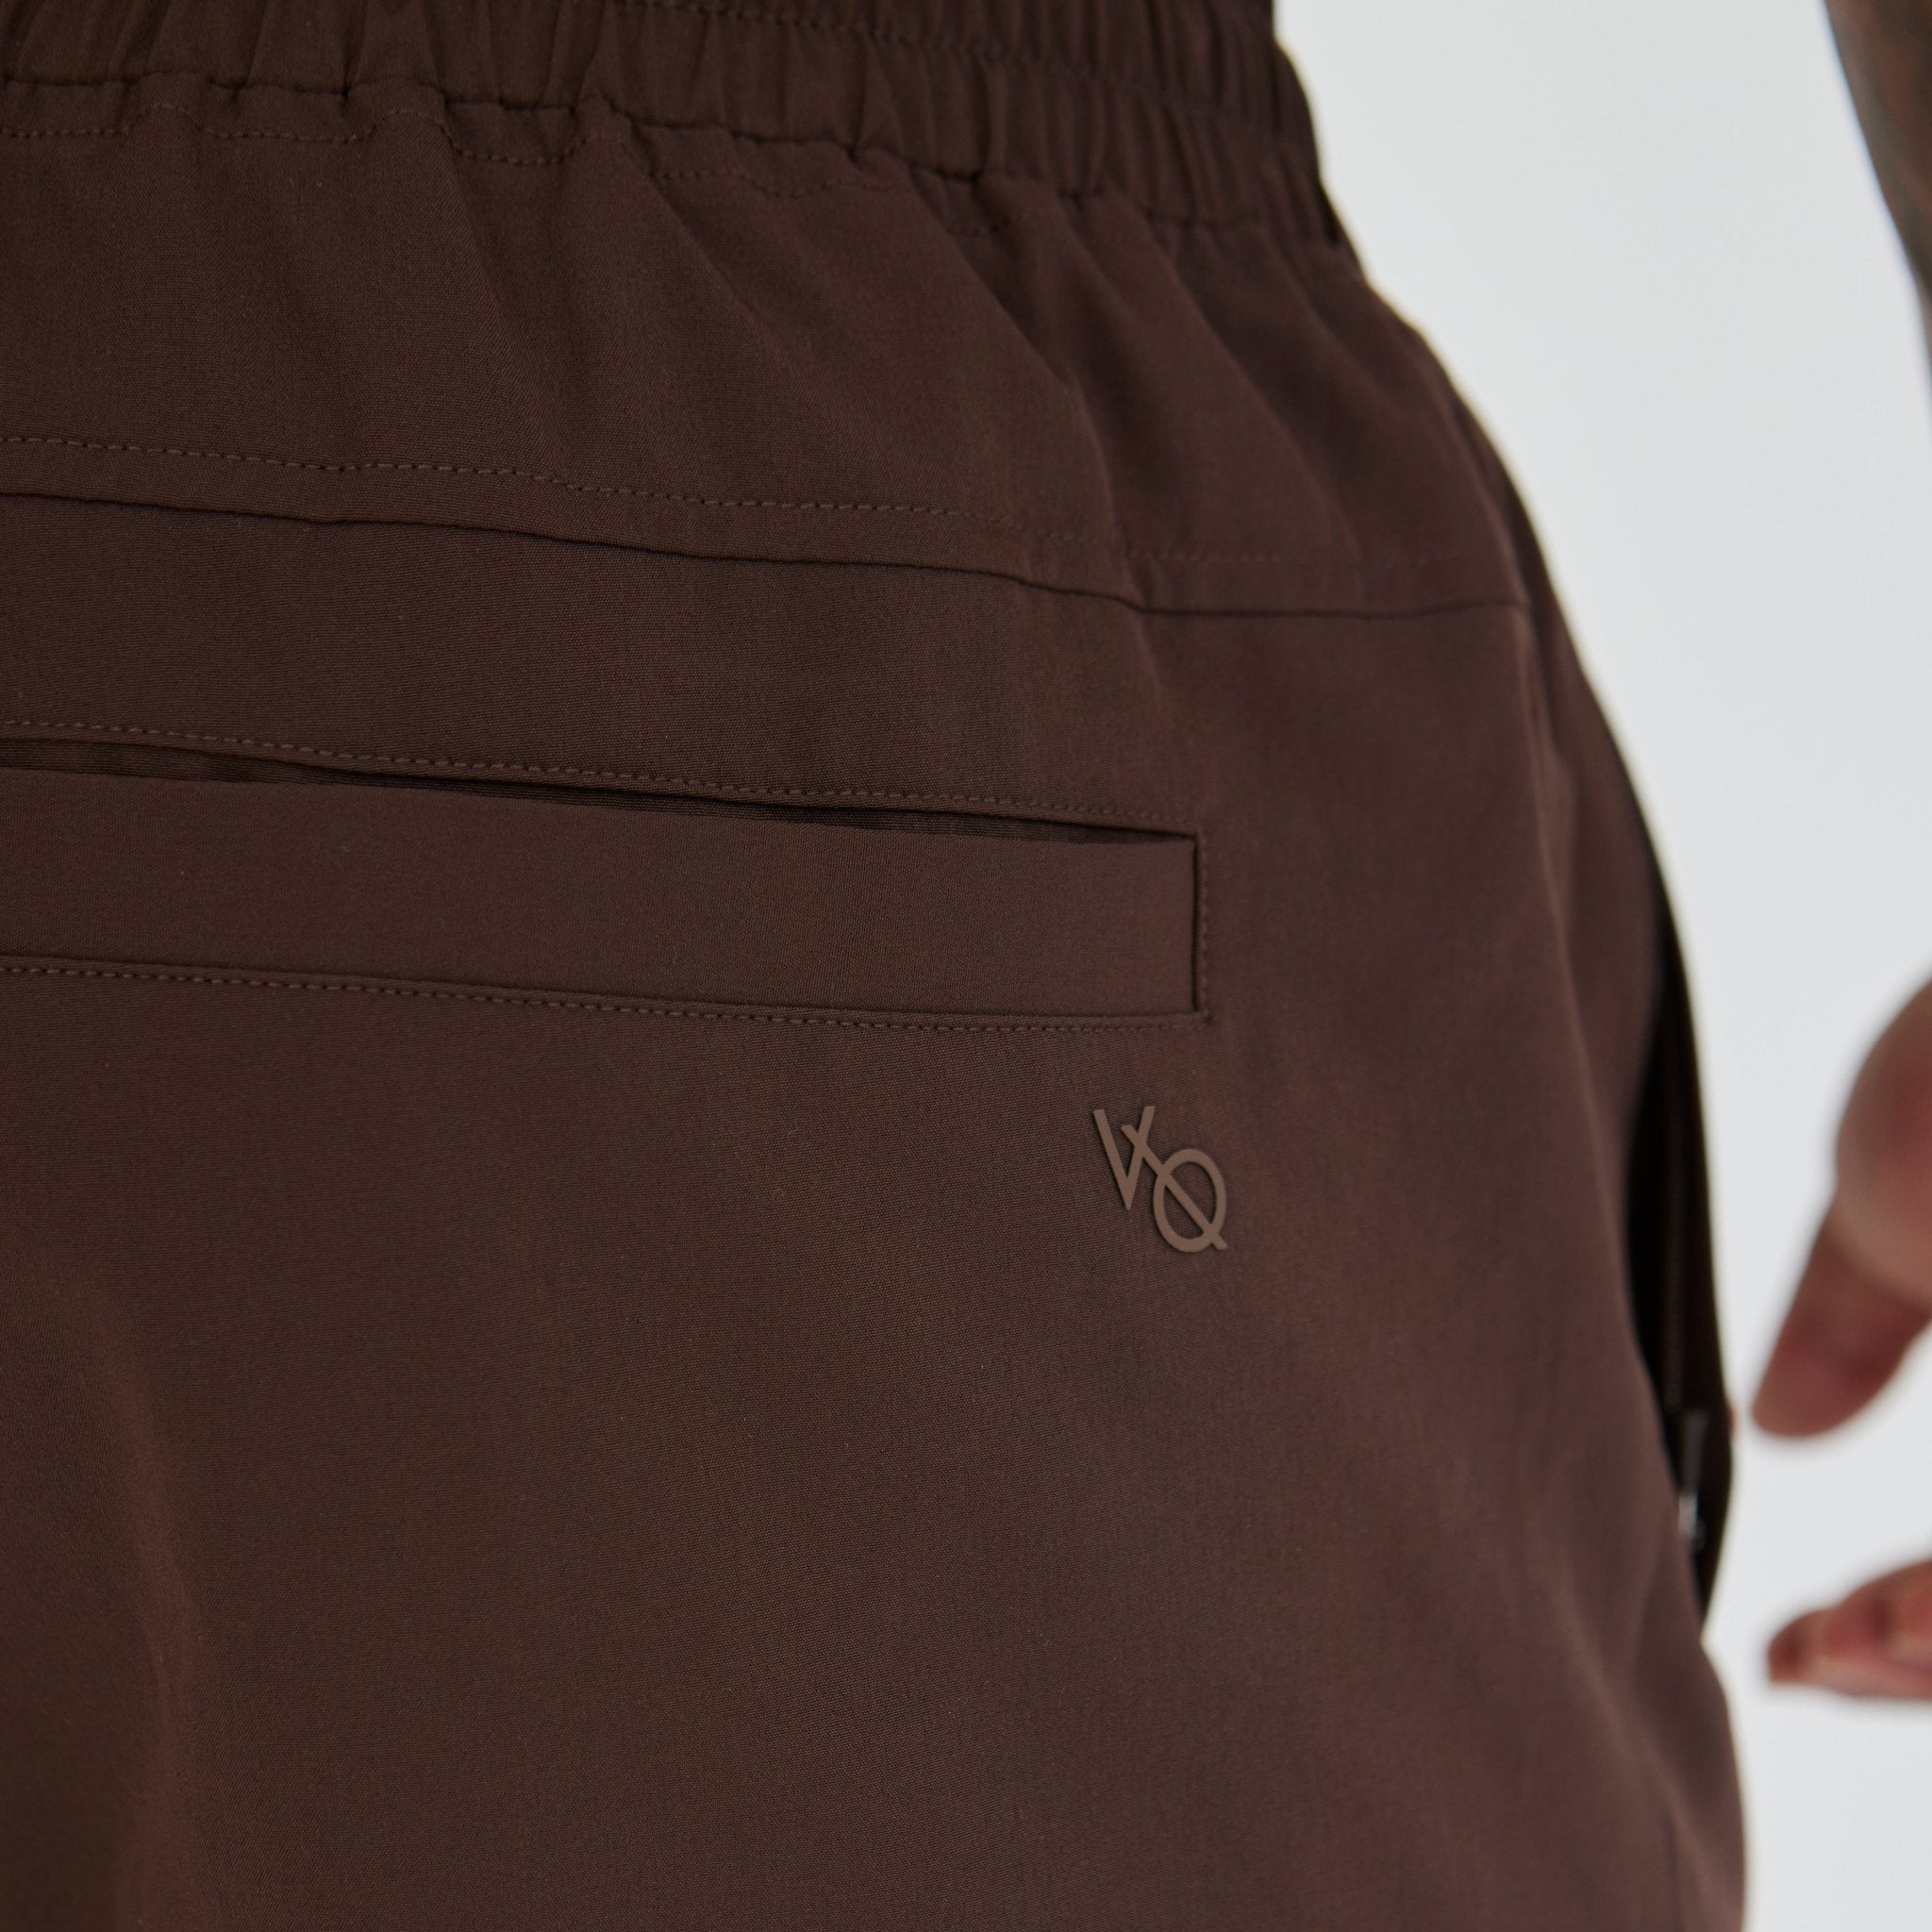 Vanquish Utility V3 Brown 4" Shorts - Vanquish Fitness